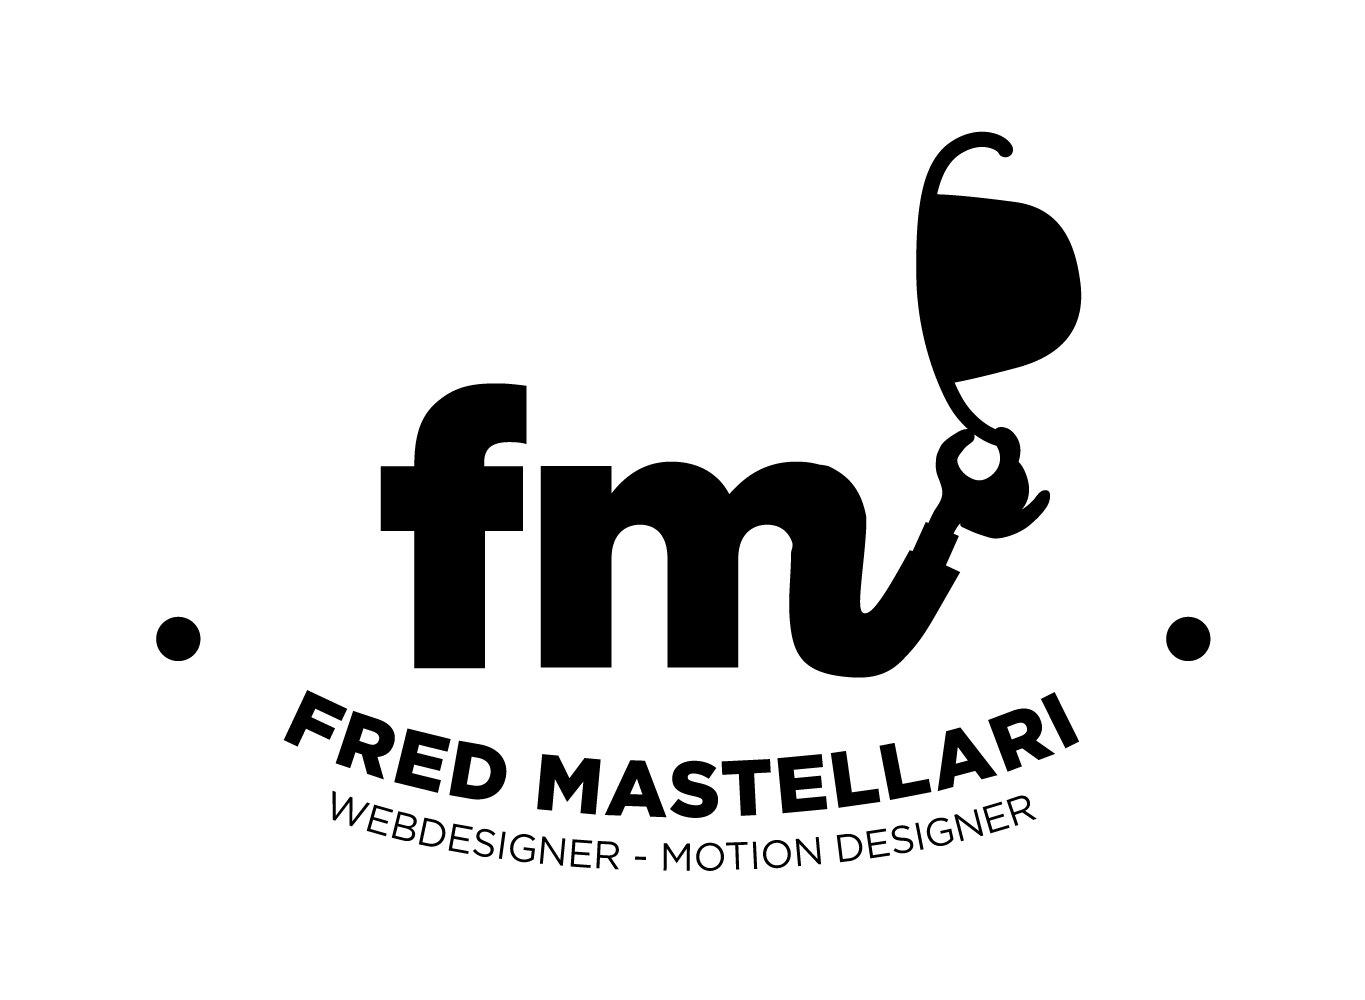 Frédéric Mastellari